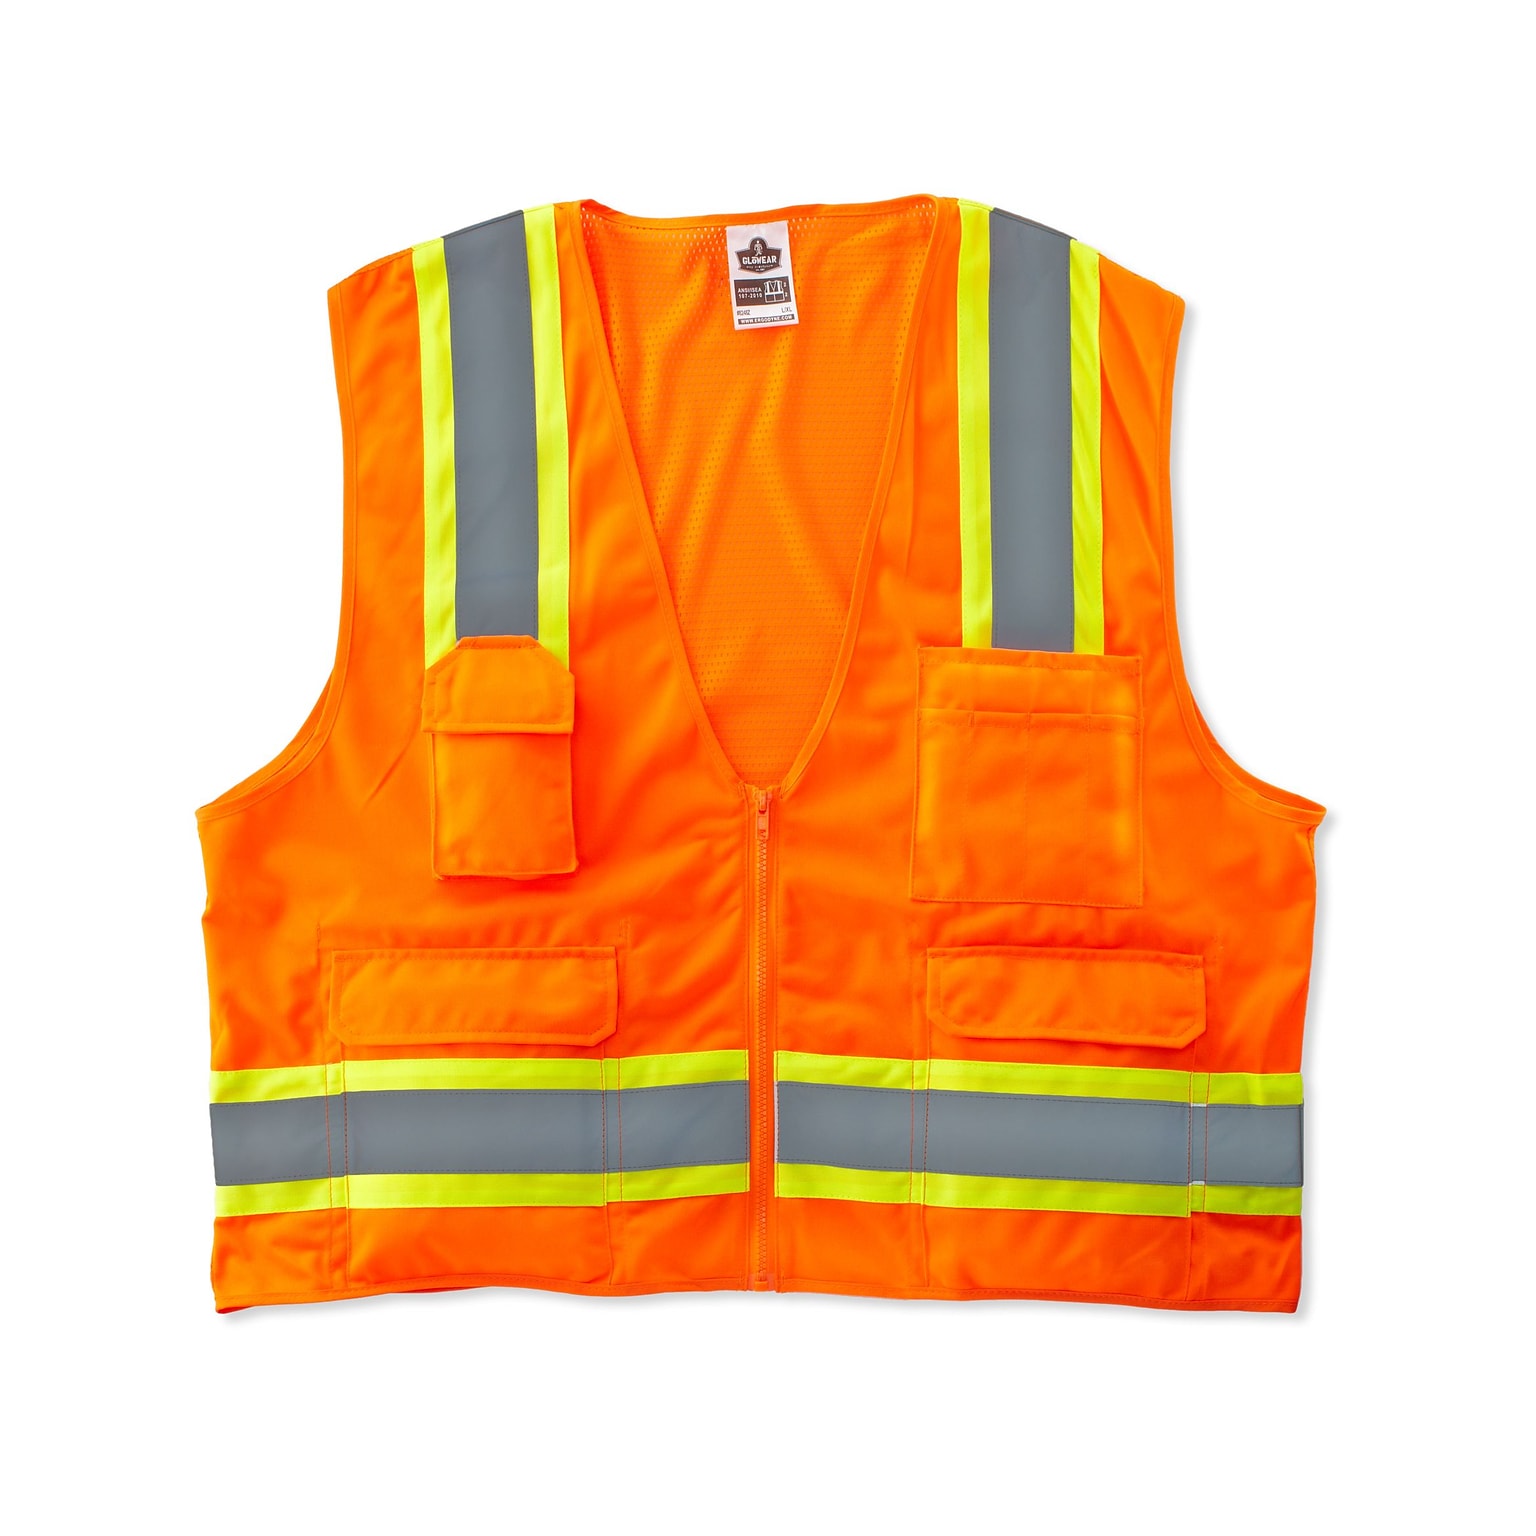 Ergodyne GloWear 8248Z High Visibility Sleeveless Safety Vest, ANSI Class R2, Orange, 2XL/3XL (24067)